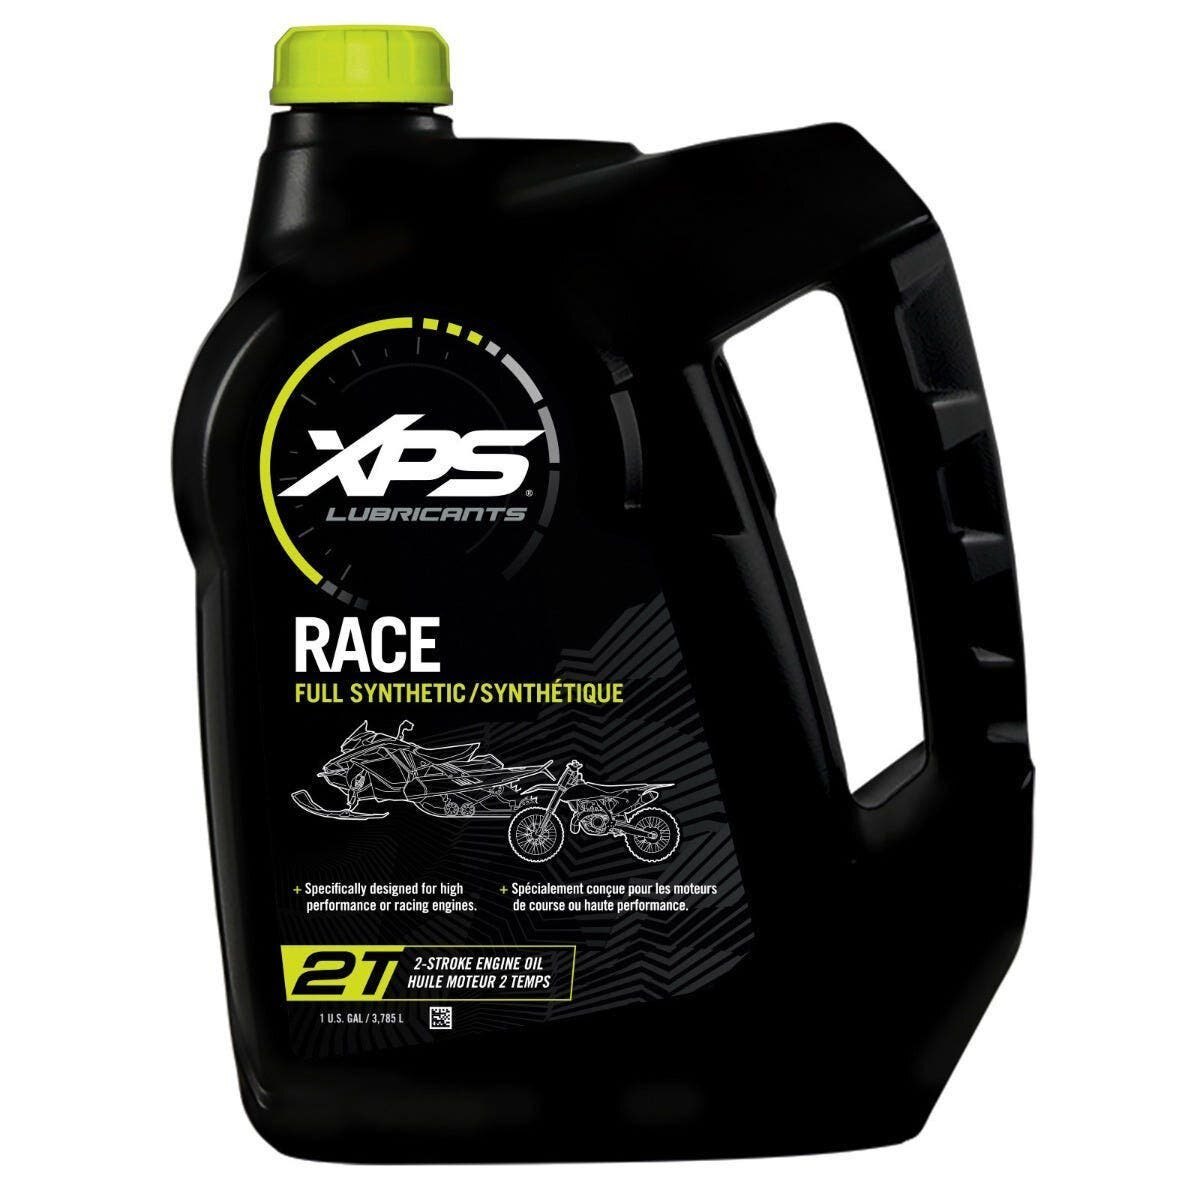 2 Stroke Racing Synthetic Oil